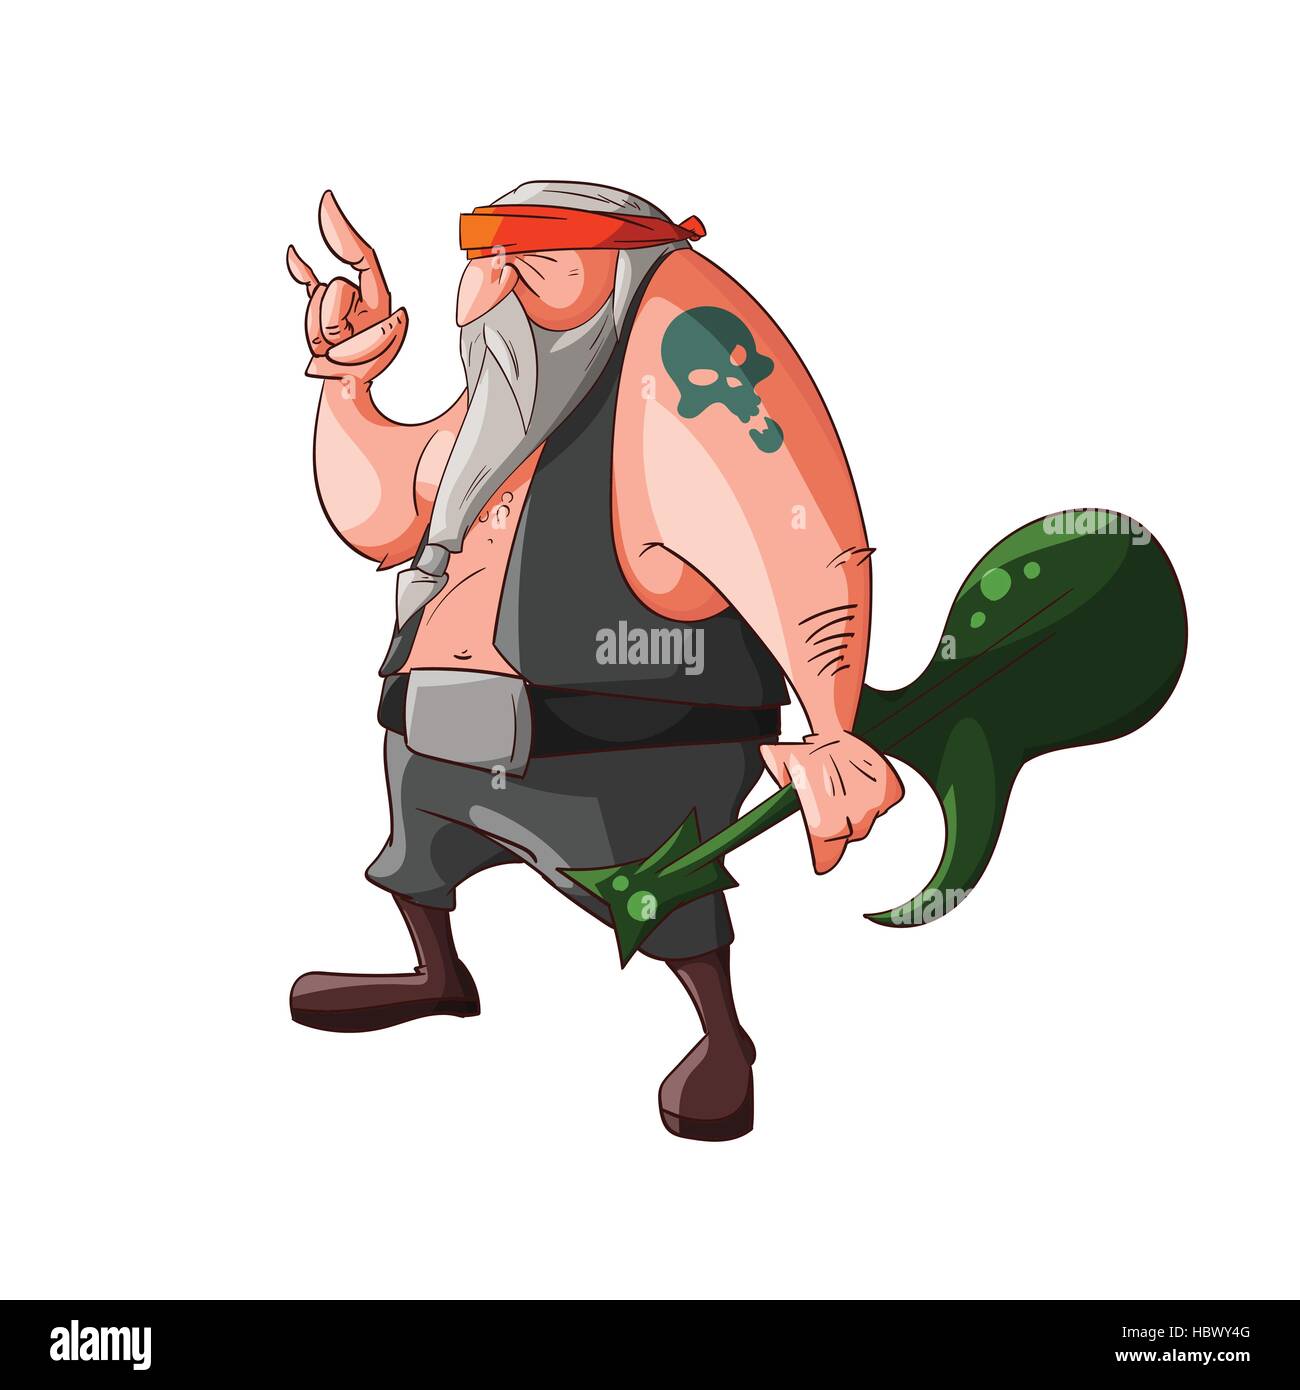 Colorufl Vektor-Illustration Karikatur Rocker, Biker oder Bande Mitglied Stock Vektor